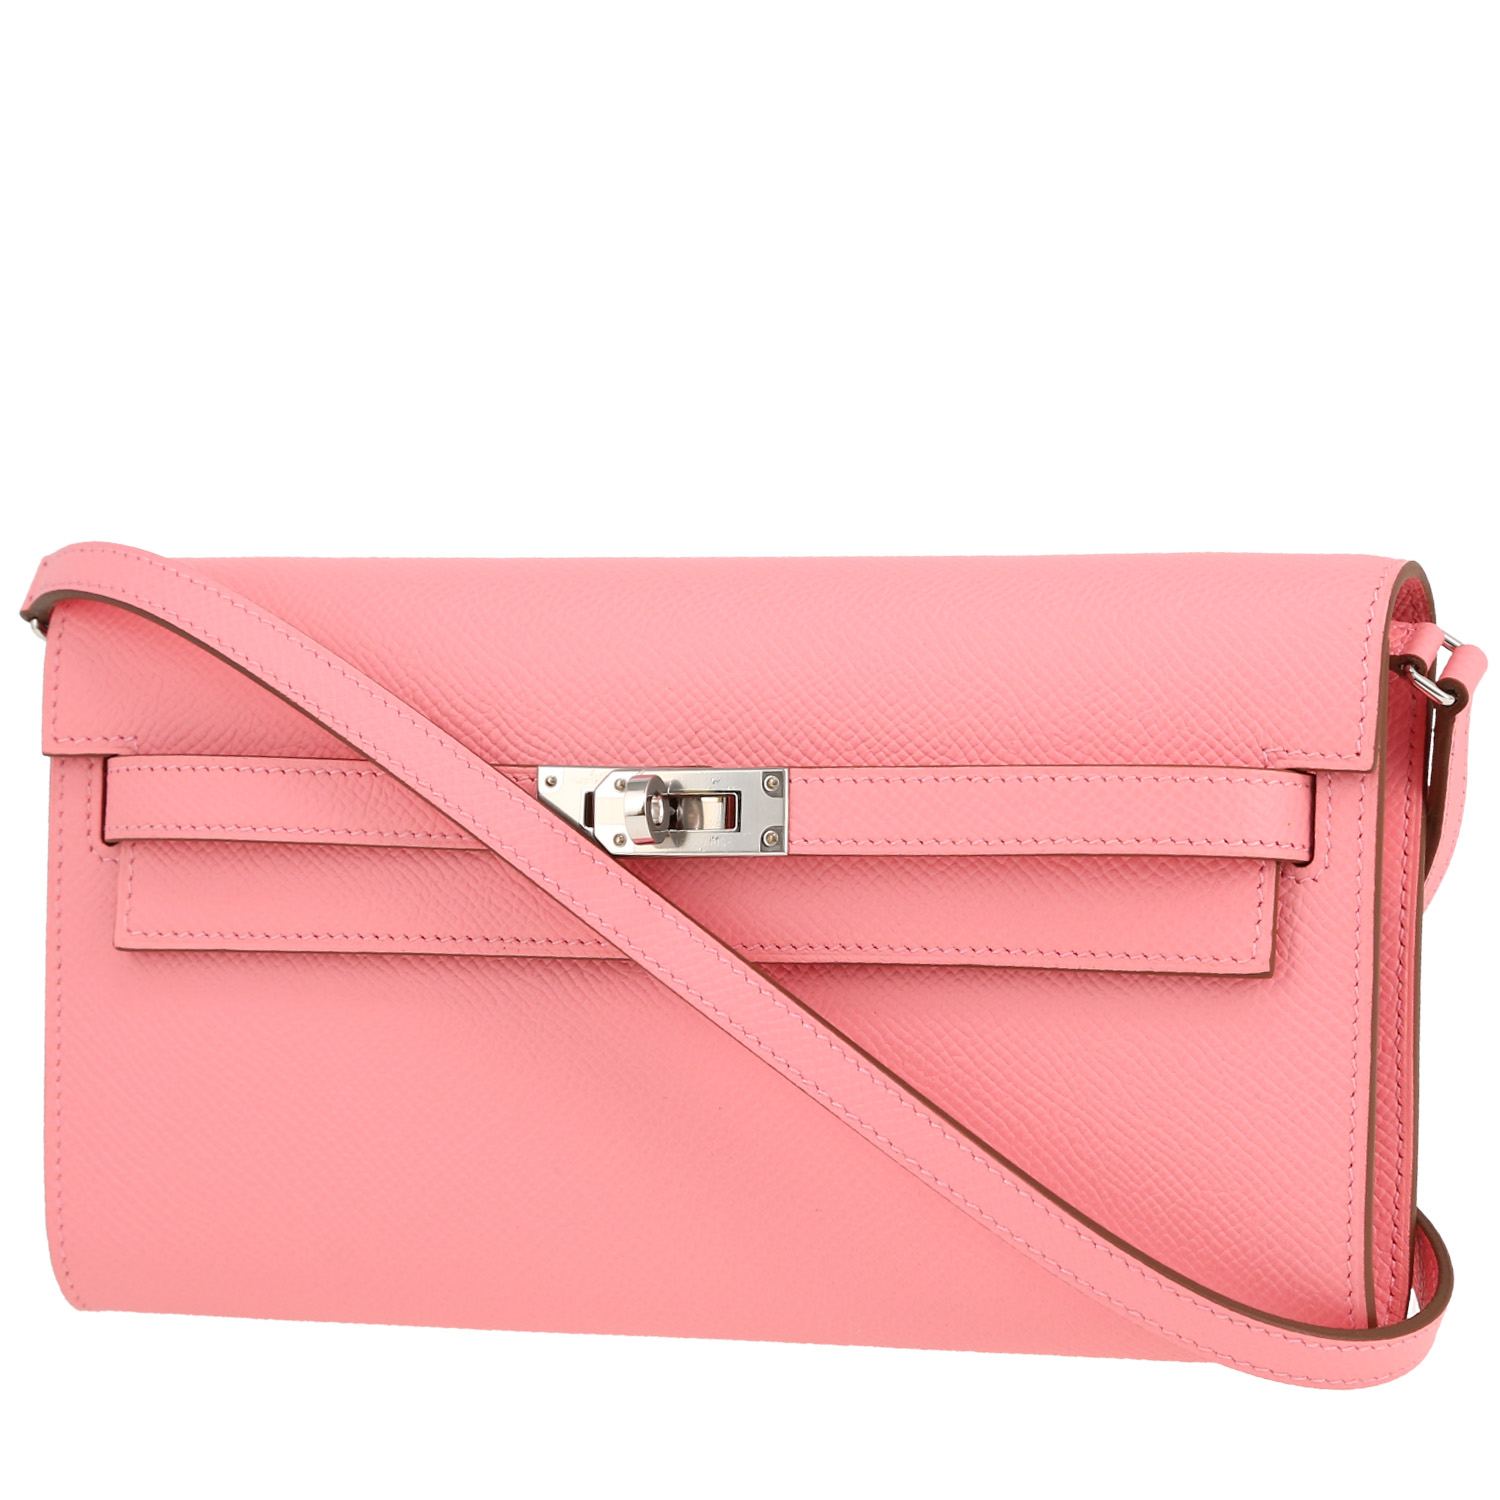 Kelly To Go Handbag/Clutch In Rose Confetti Epsom Leather